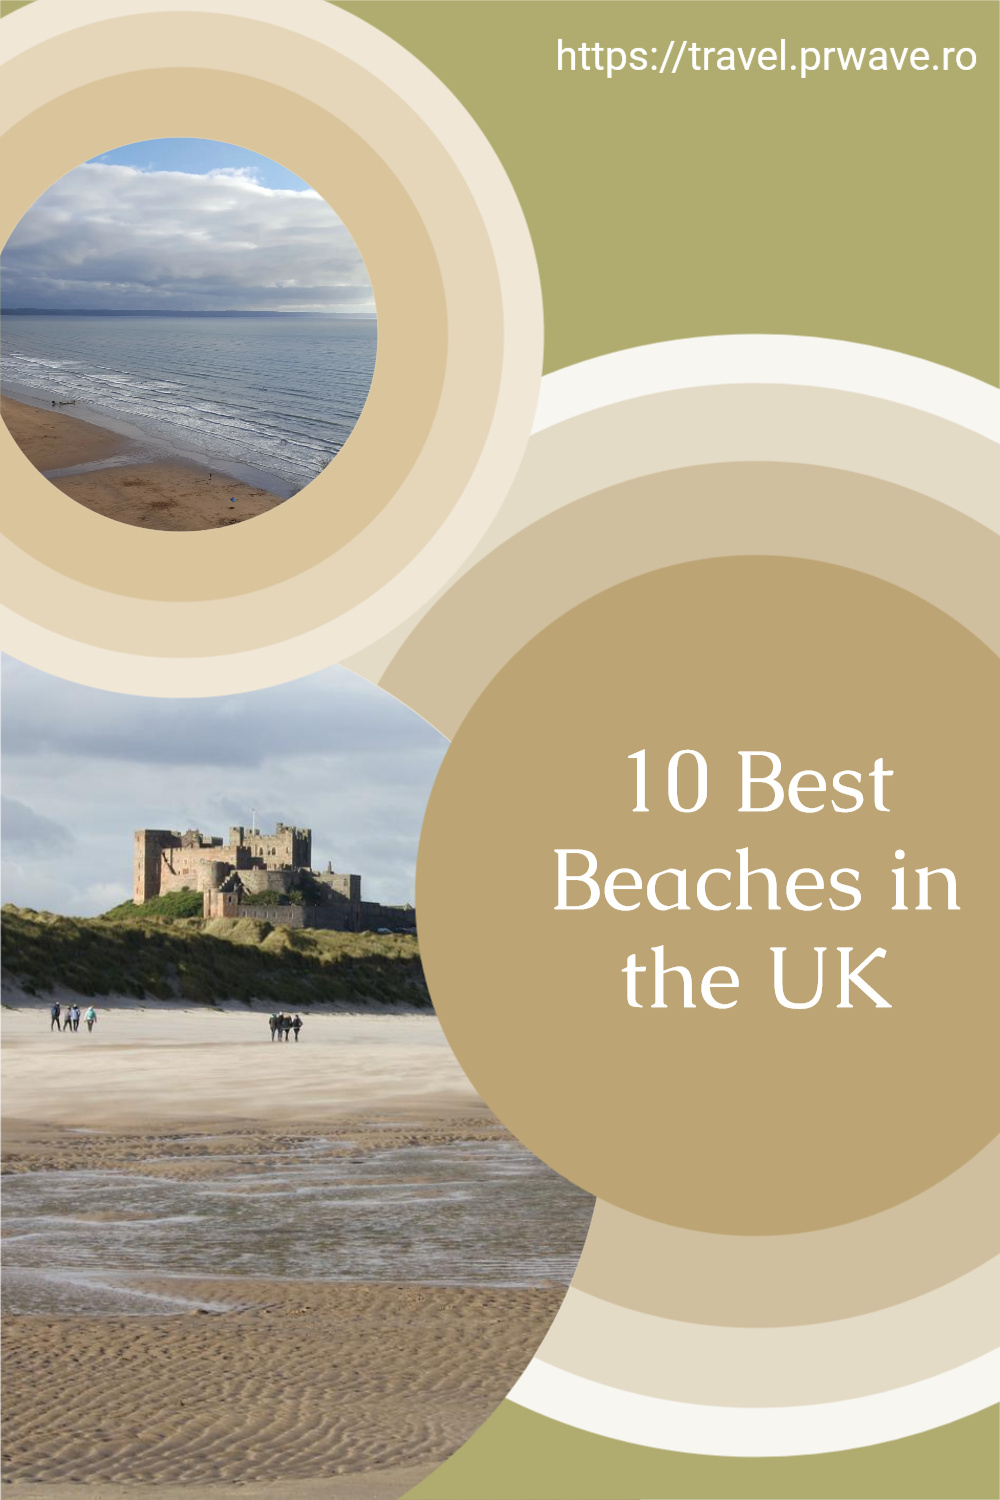 10 Best Beaches in the UK Worthy to Visit. Discover the top UK beaches! #uk #ukbeaches #ukbeach #beach #summer #sand #europetravel #beachdestination #uktravel